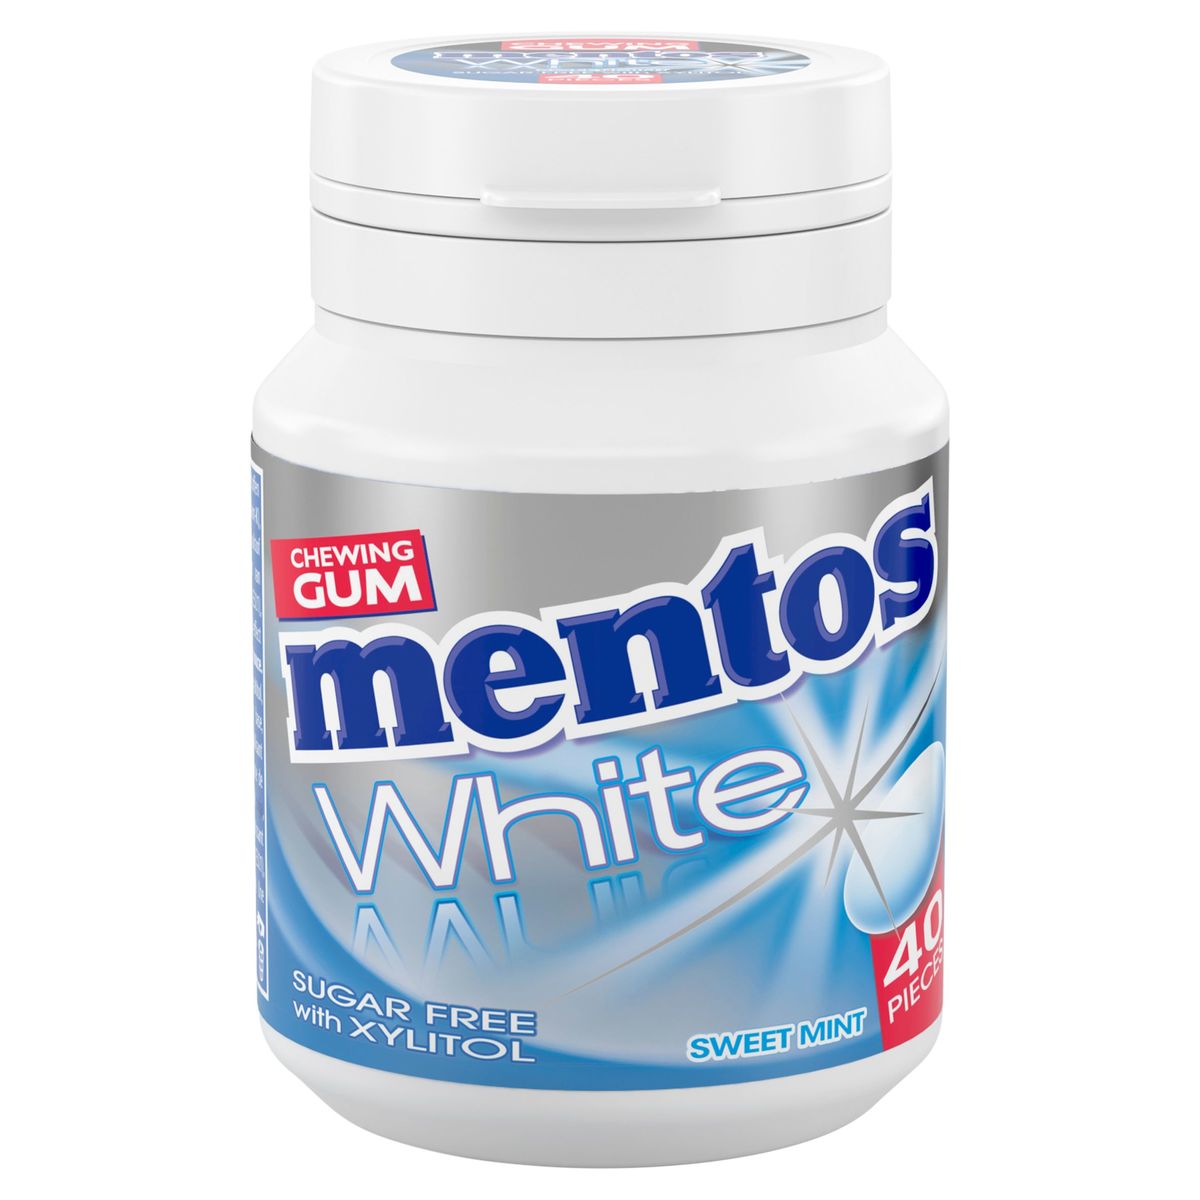 Mentos Chewing Gum White Sweet Mint Sugar Free 40 Pièces 60 g